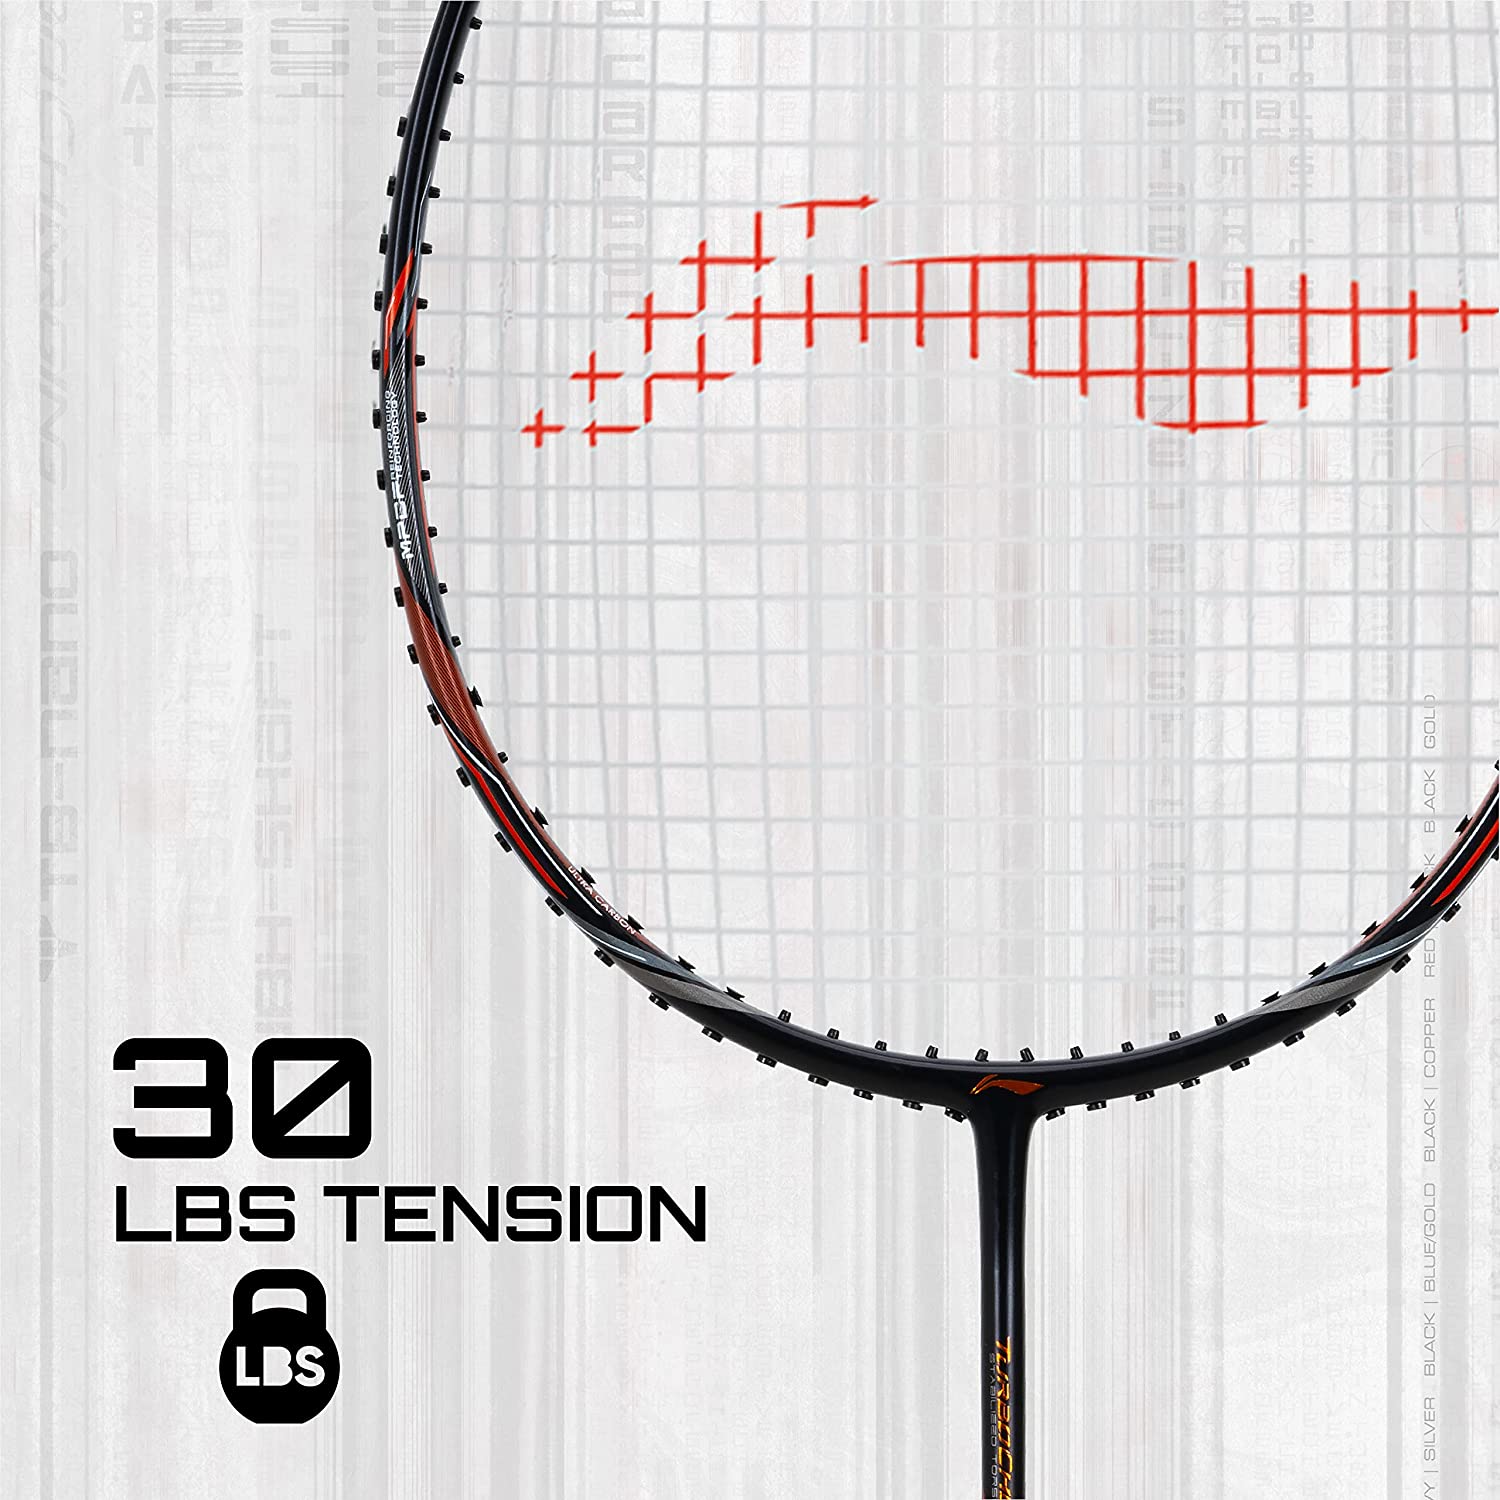 Li-Ning Turbo Charging Z Combat Badminton Racquet -Black/Copper - Best Price online Prokicksports.com